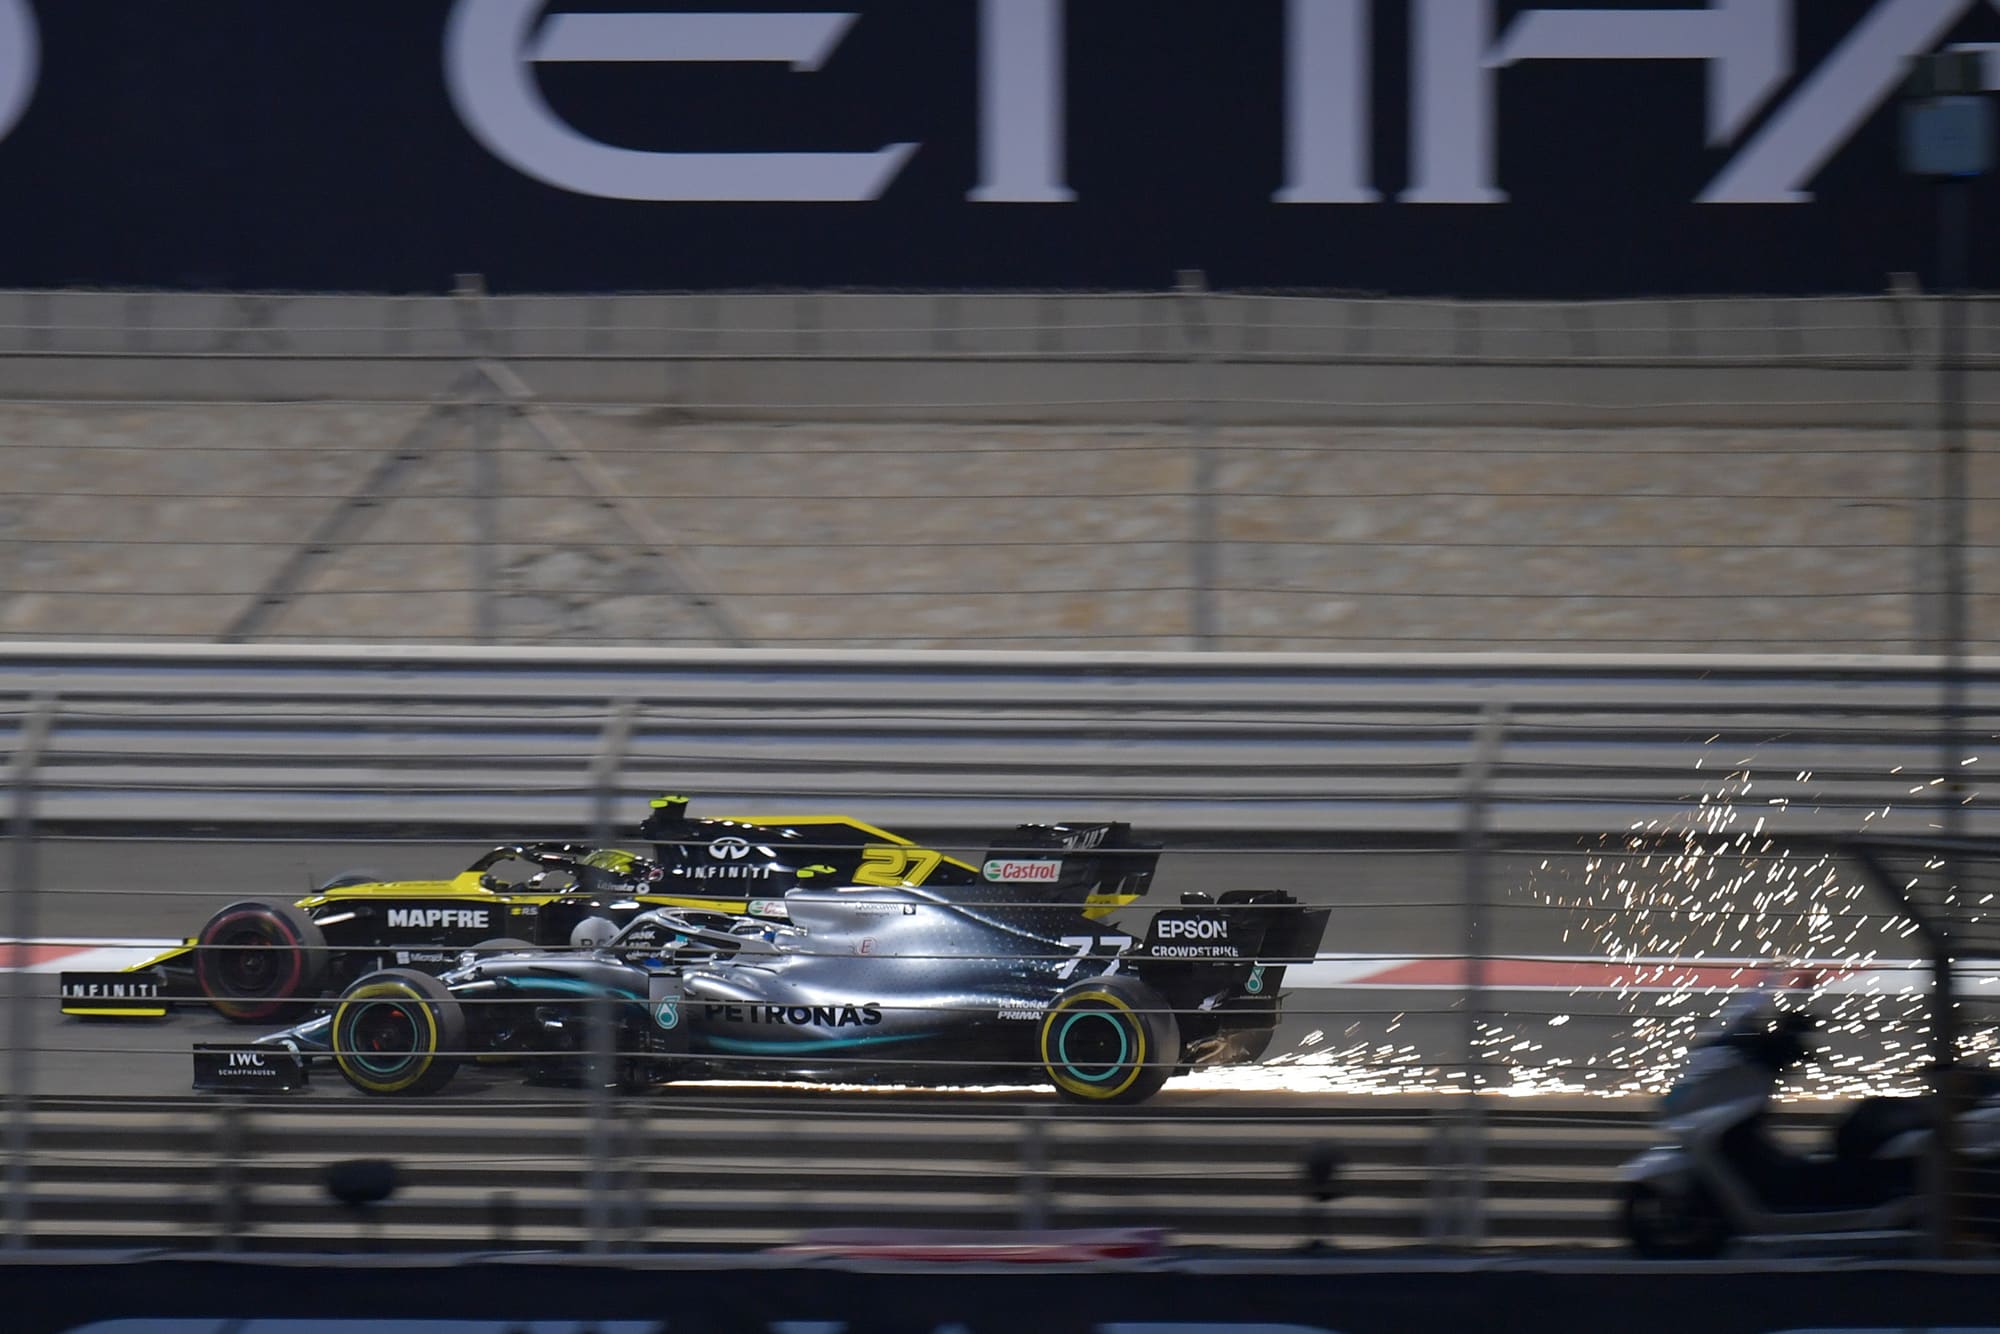 Valtteri Bottas overtakes Nico Hulkenberg during the 2019 Abu Dhabi Grand Prix